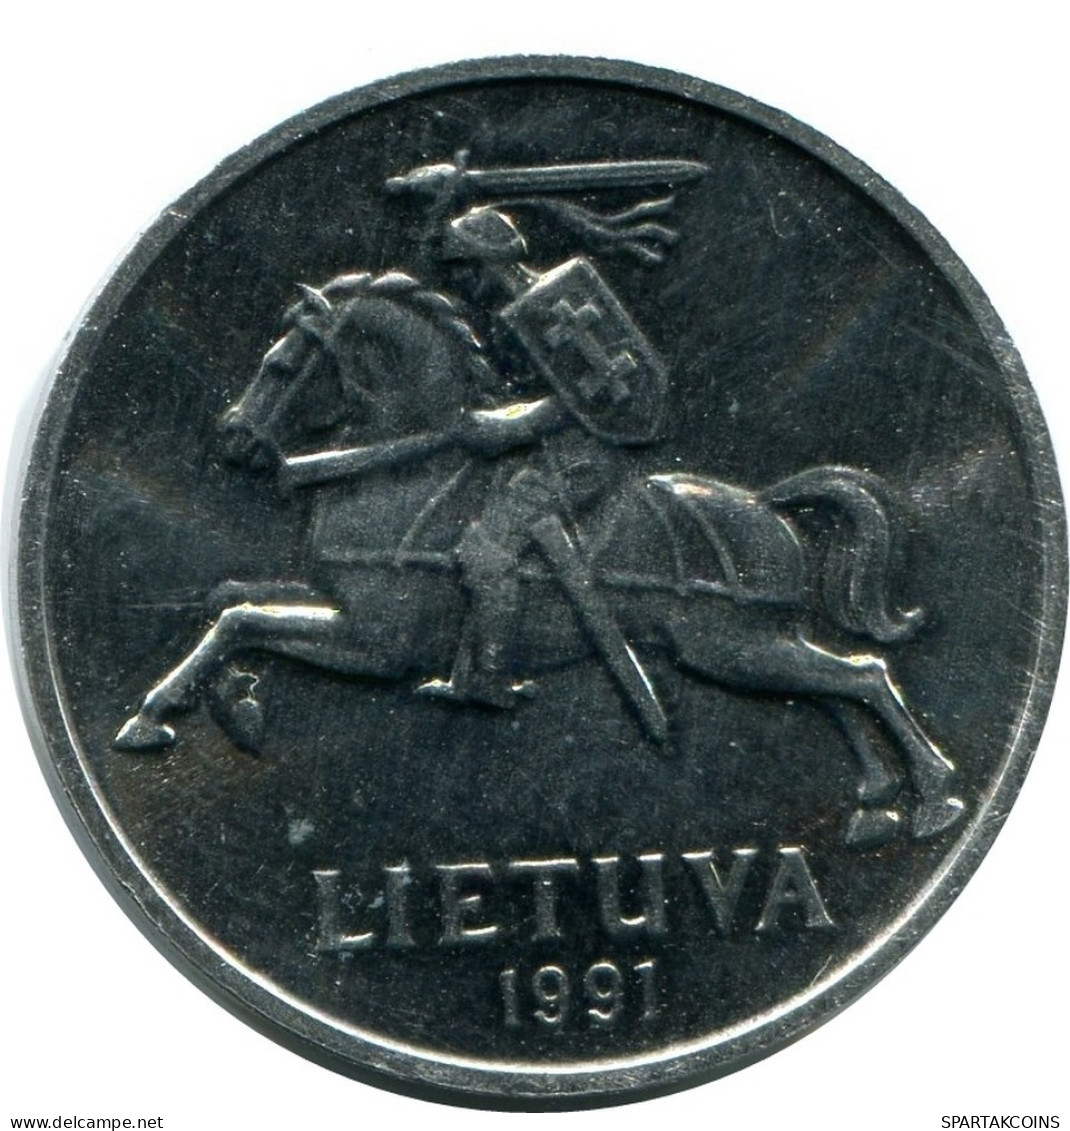 5 CENTAI 1991 LITUANIA LITHUANIA UNC Moneda #M10213.E.A - Lithuania